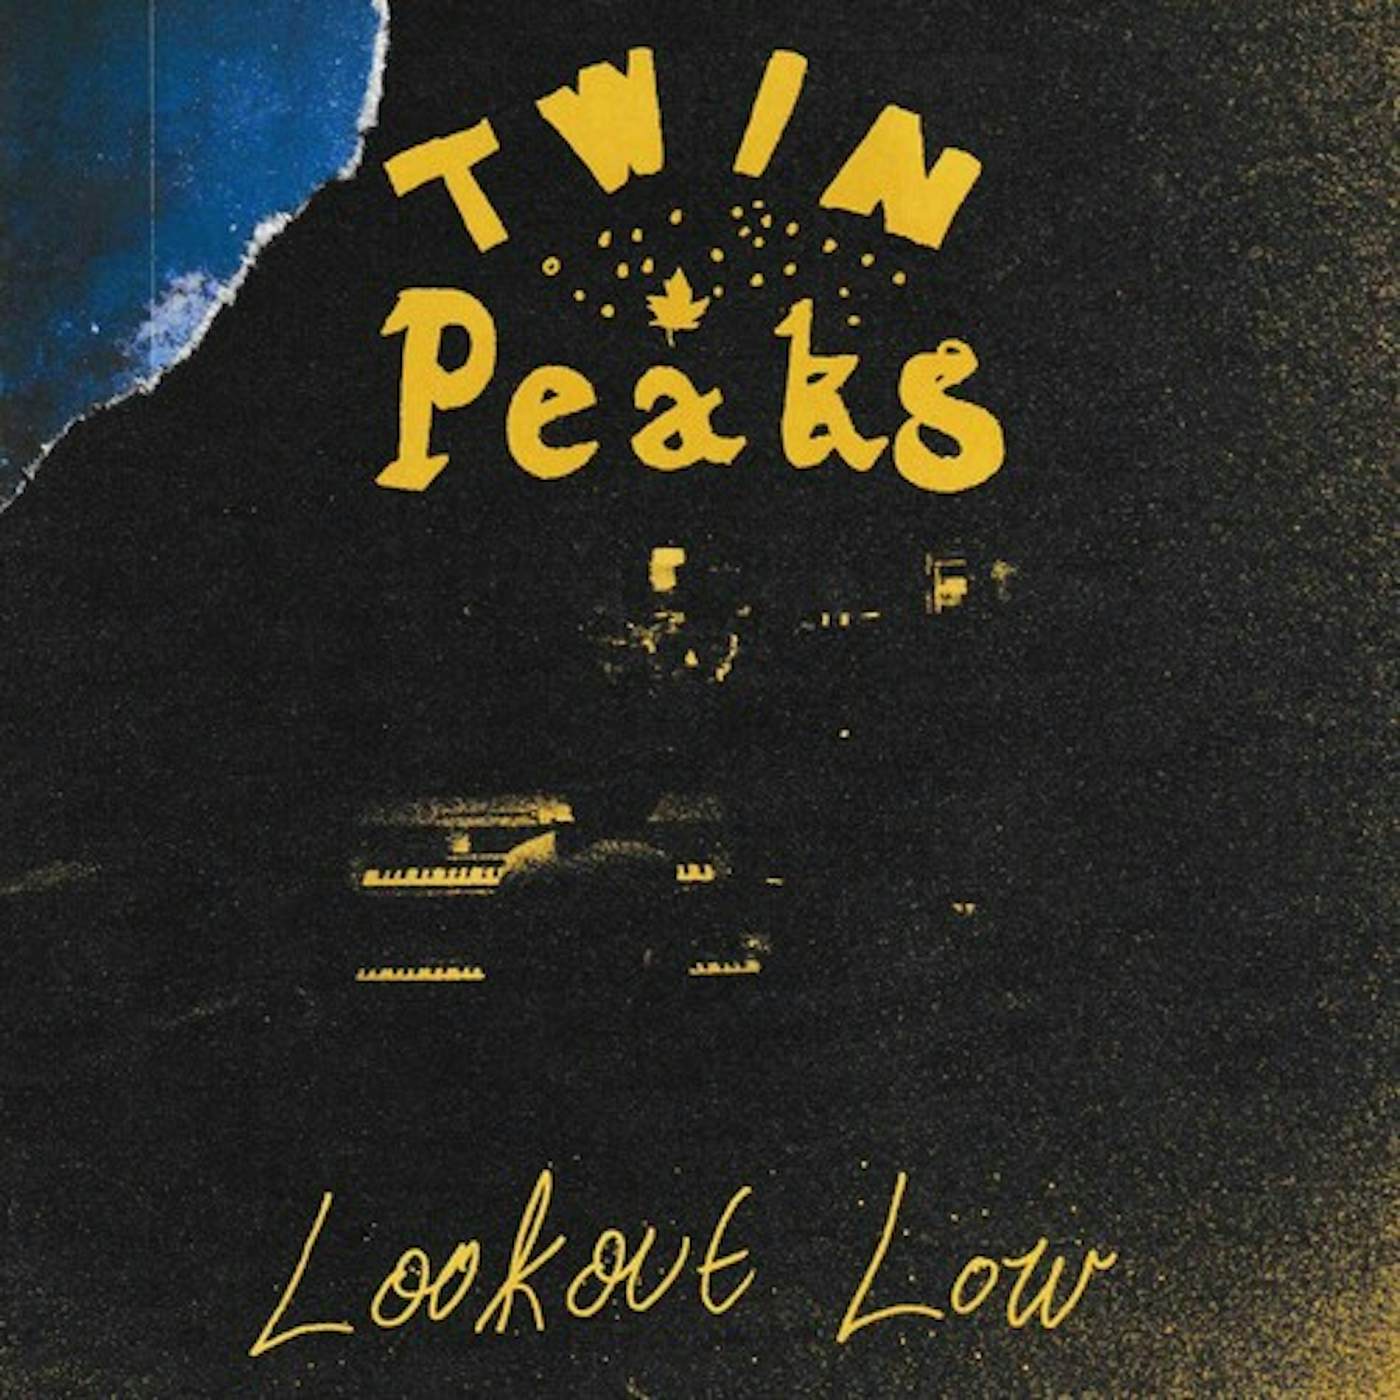 Twin Peaks Lookout Low Vinyl Record